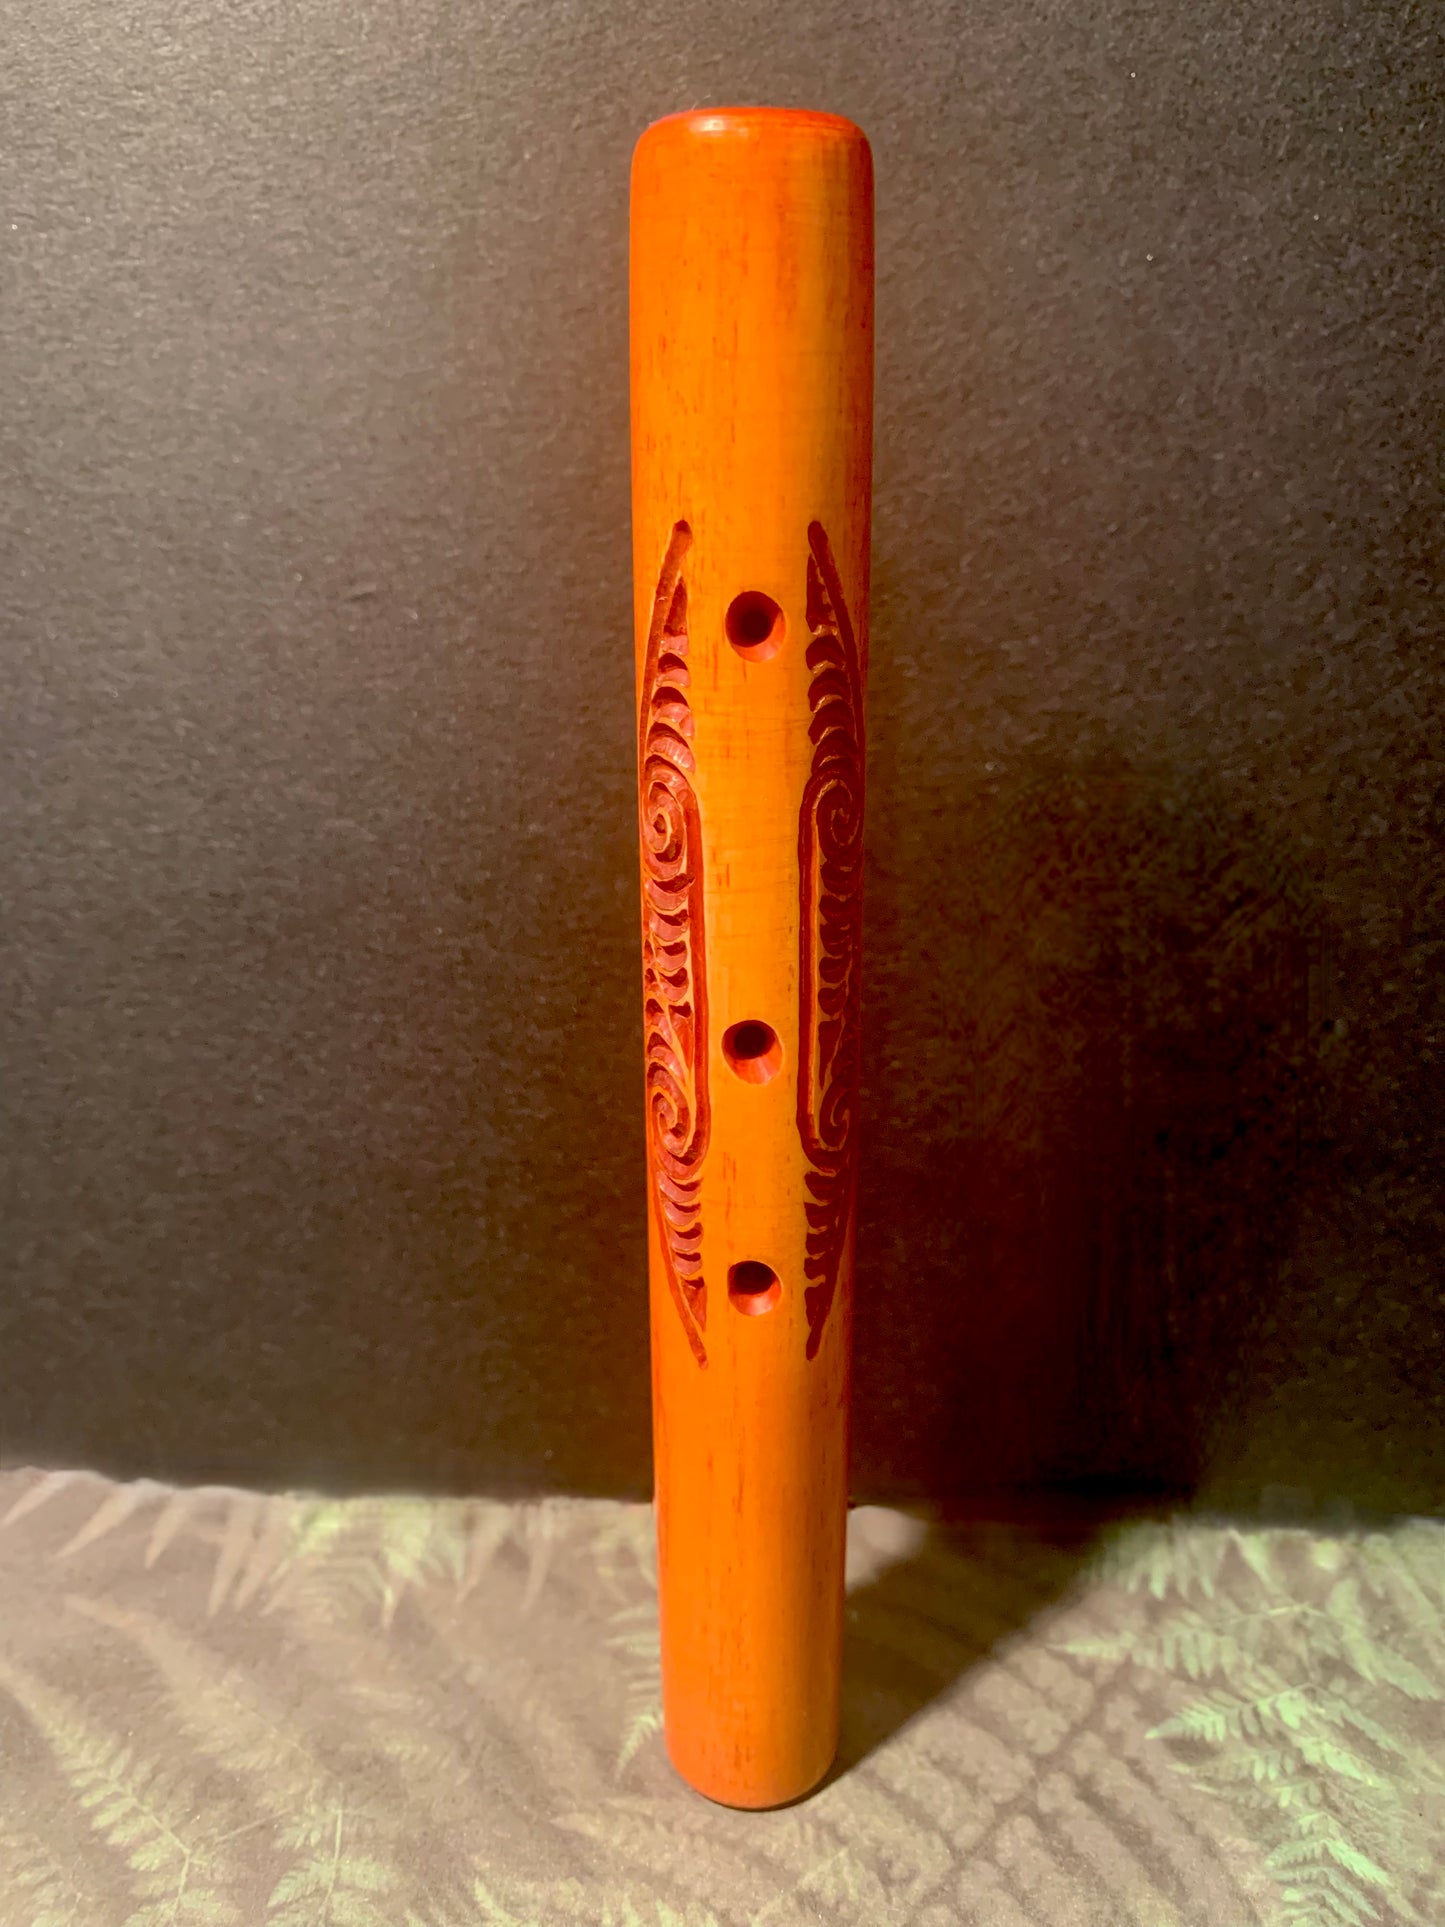 Carved Bone Koauau (flute) 15cm  - by Alex Sands